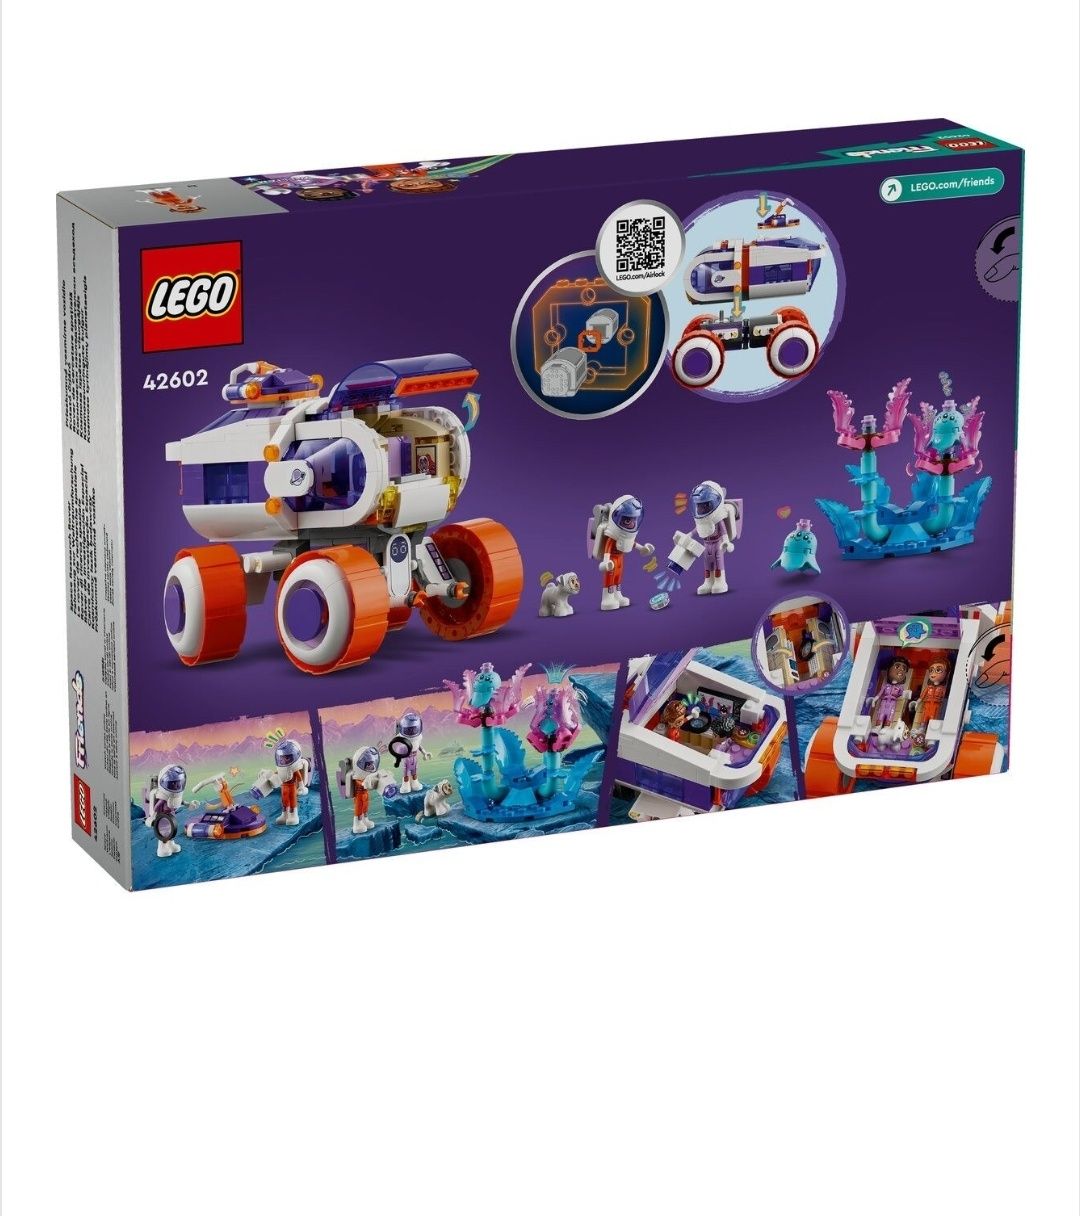 LEGO® Friends - Rover de Cercetare Spatiala 42602, 514 piese